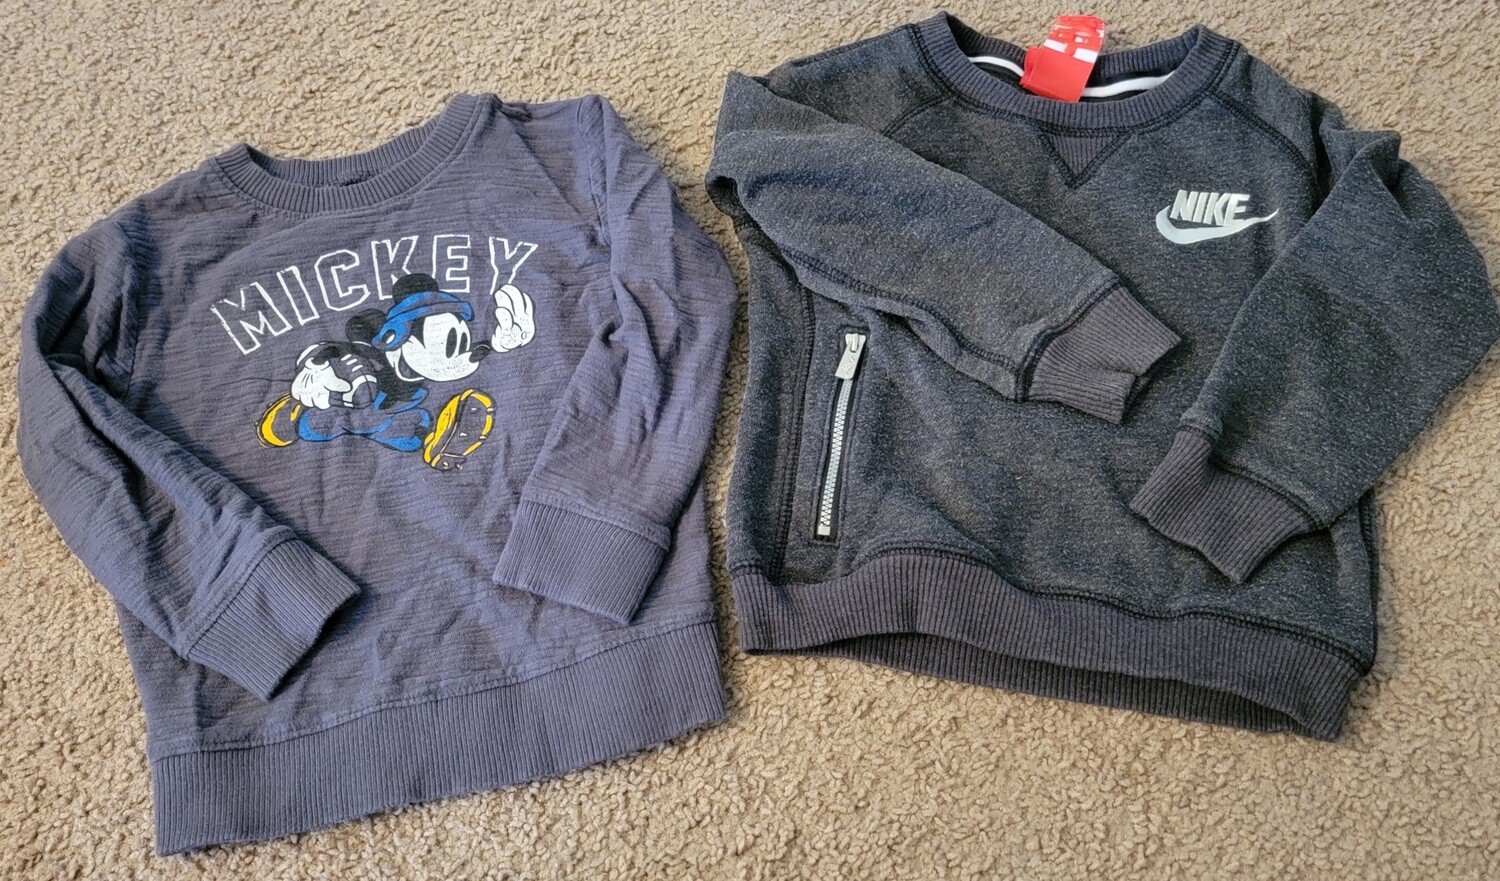 Mickey shirt and Nike